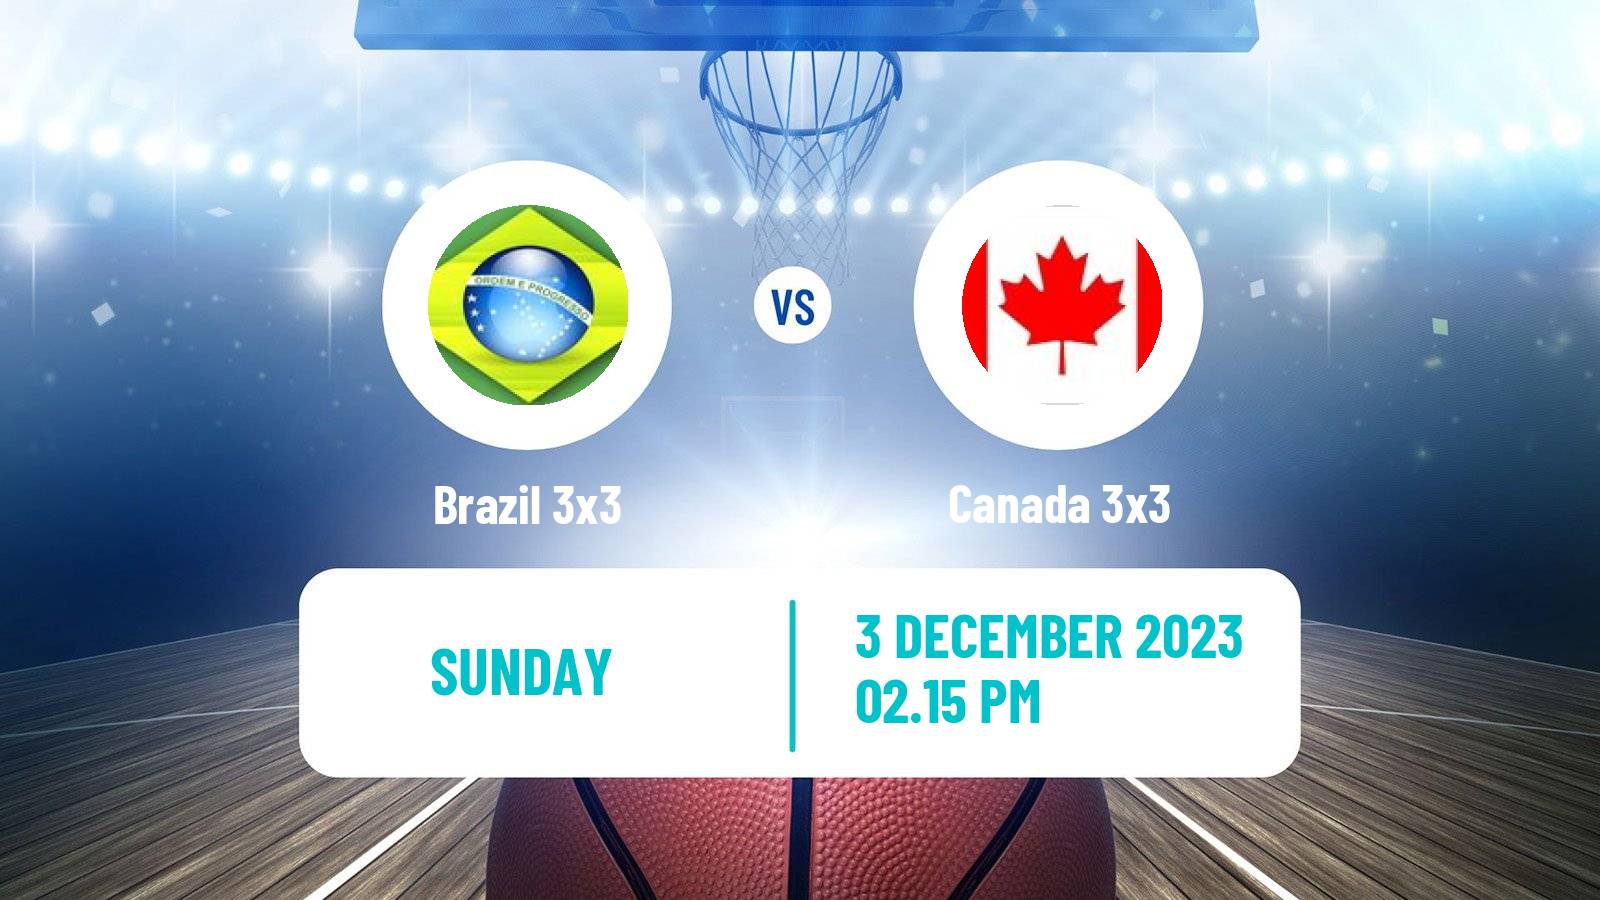 Basketball Americup 3x3 Brazil 3x3 - Canada 3x3